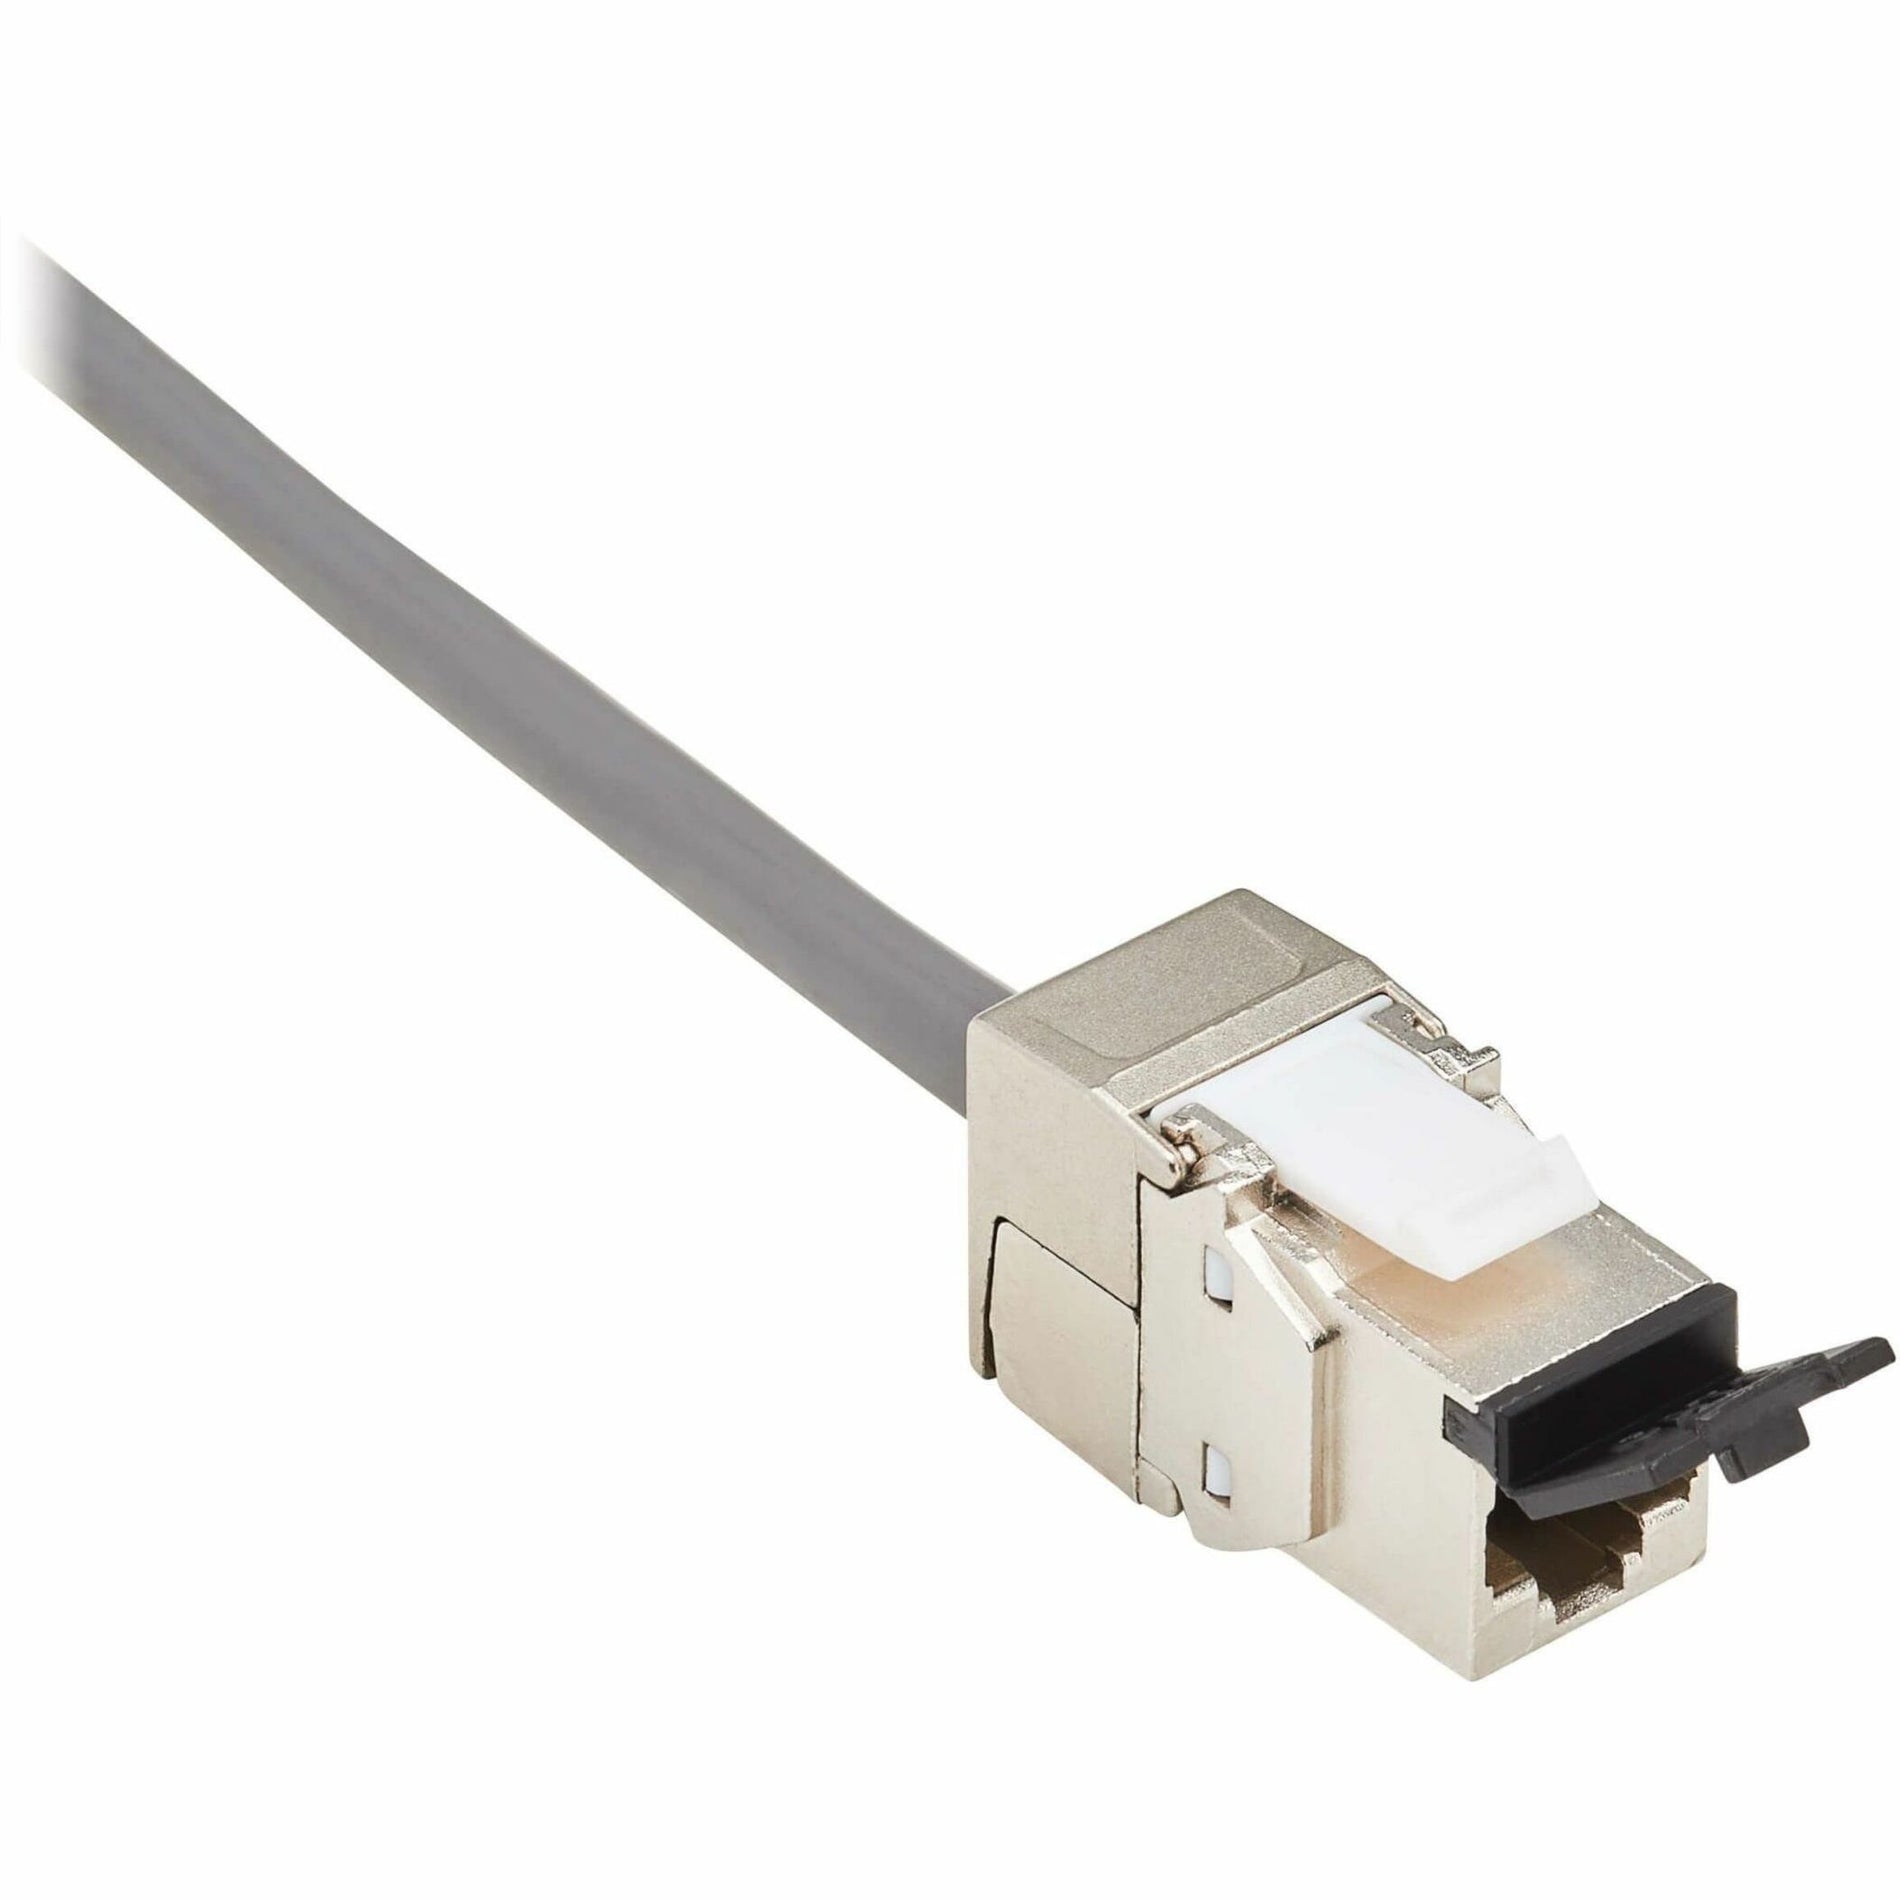 Tripp Lite N238-SHC8-TF-1 Cat8 STP Shielded Tool-Free Keystone Jack, 568A/568B, TAA, PoE, EMI/RF Protection, PoE++, 4-Pair Power over Ethernet (4PPoE) Support